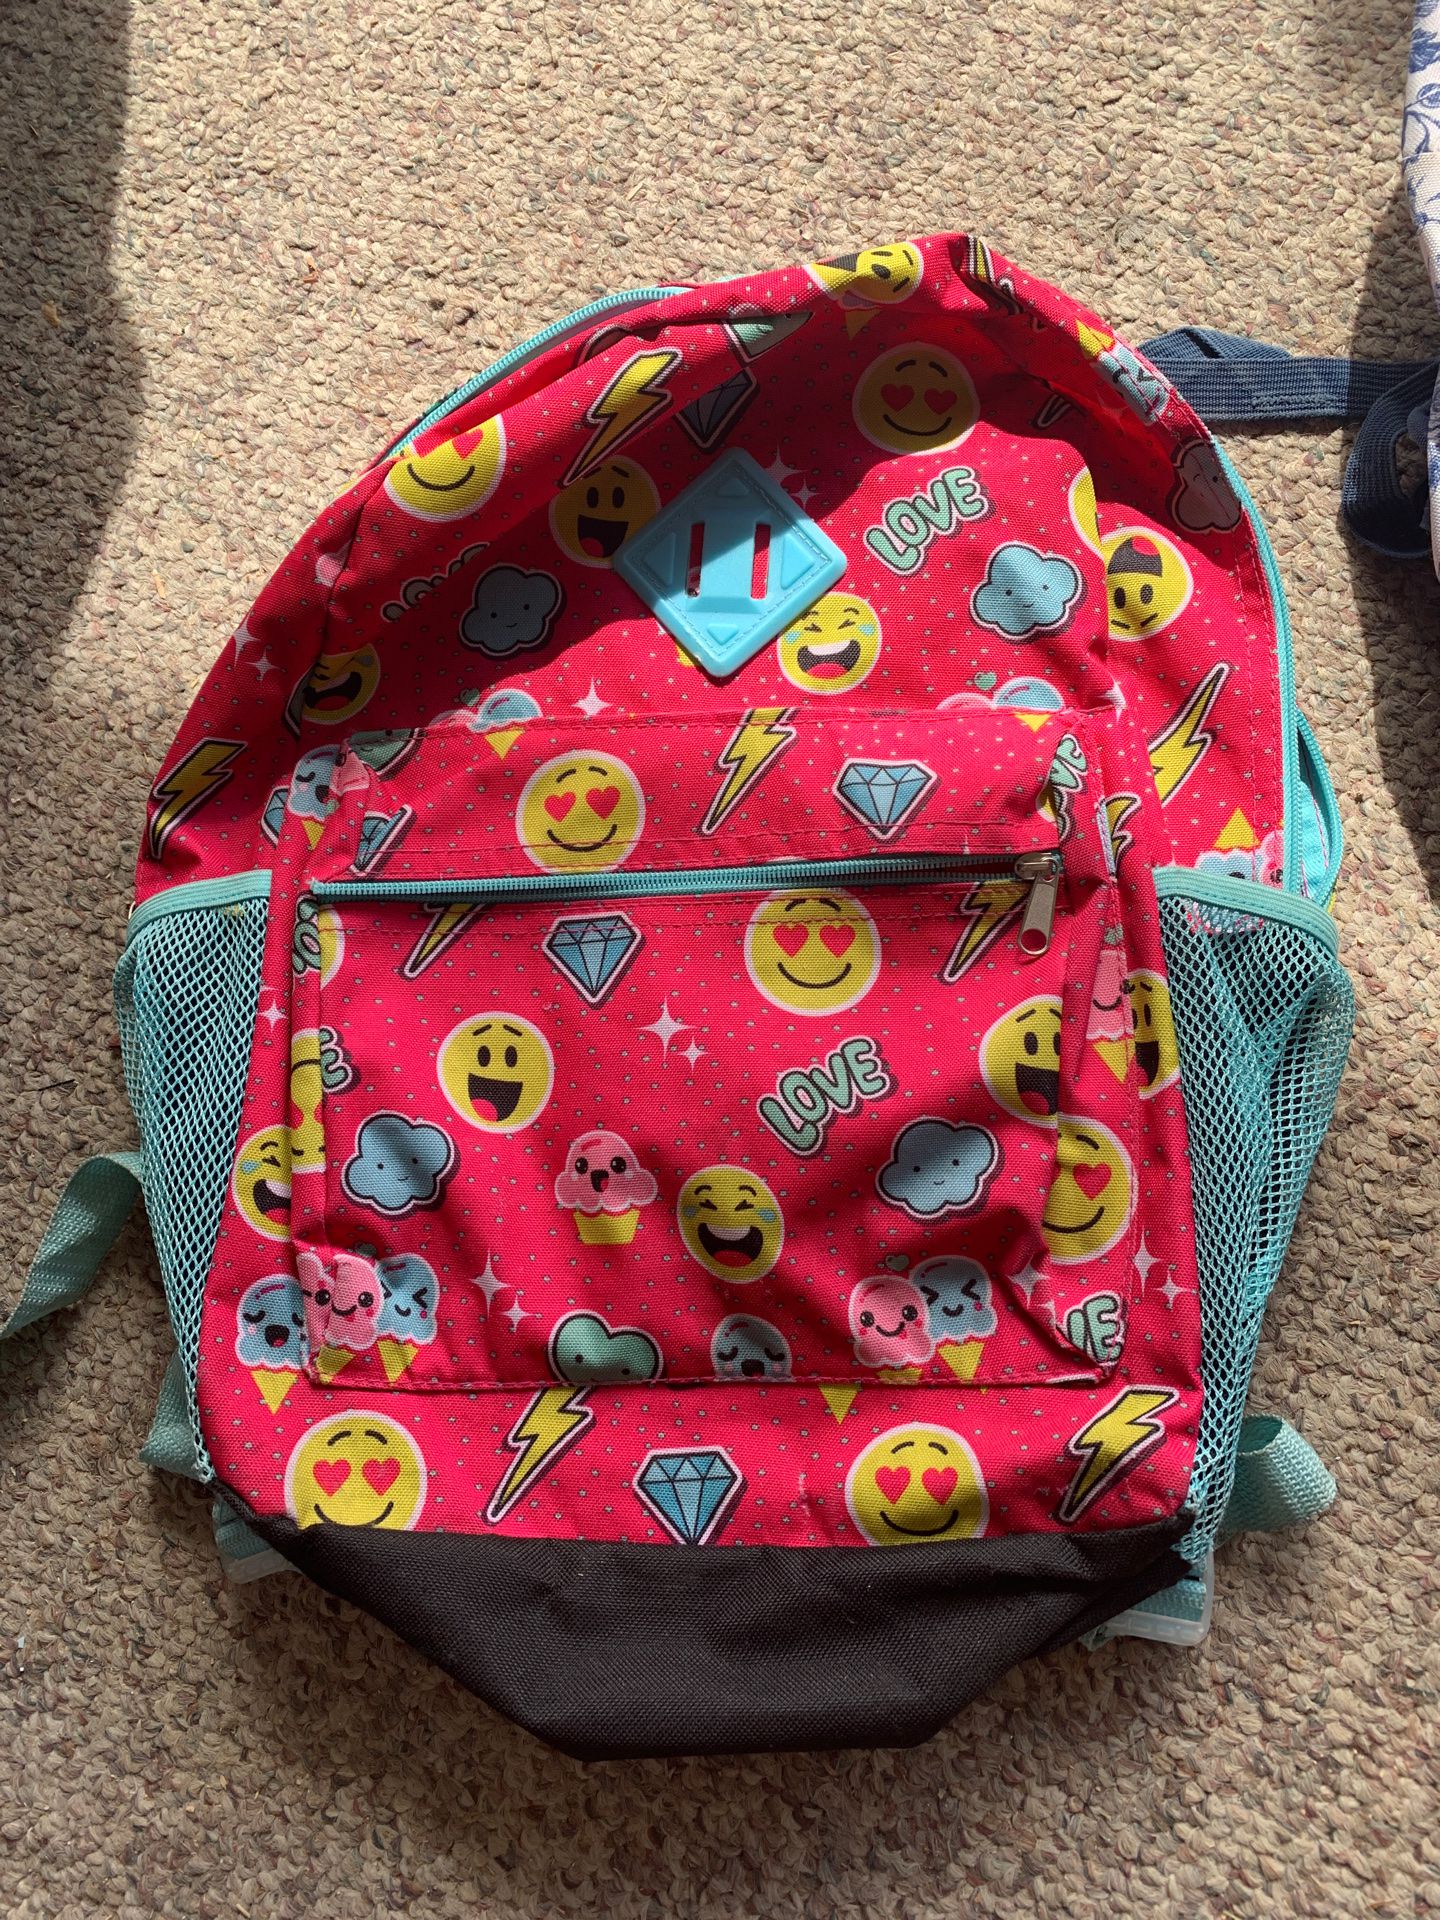 Emoji backpack barely used